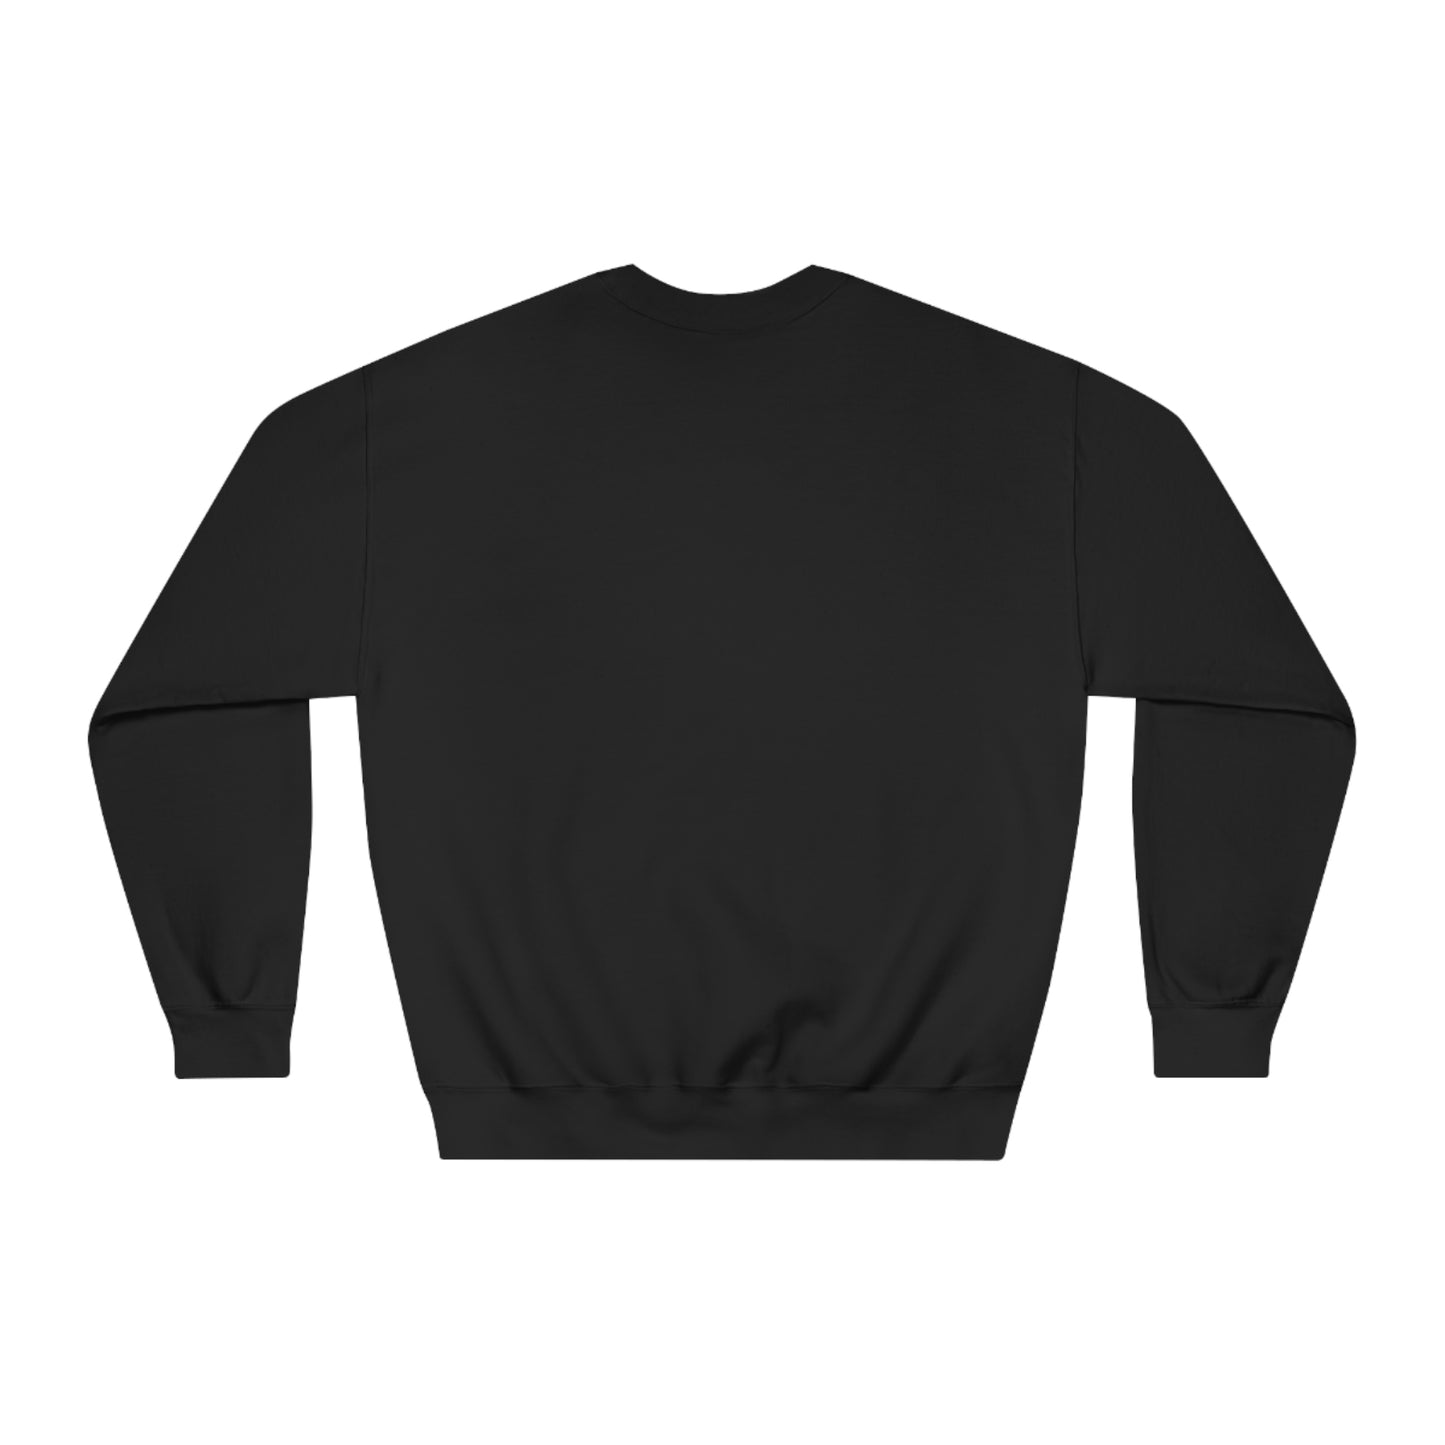 Overthinker Unisex DryBlend® Crewneck Sweatshirt